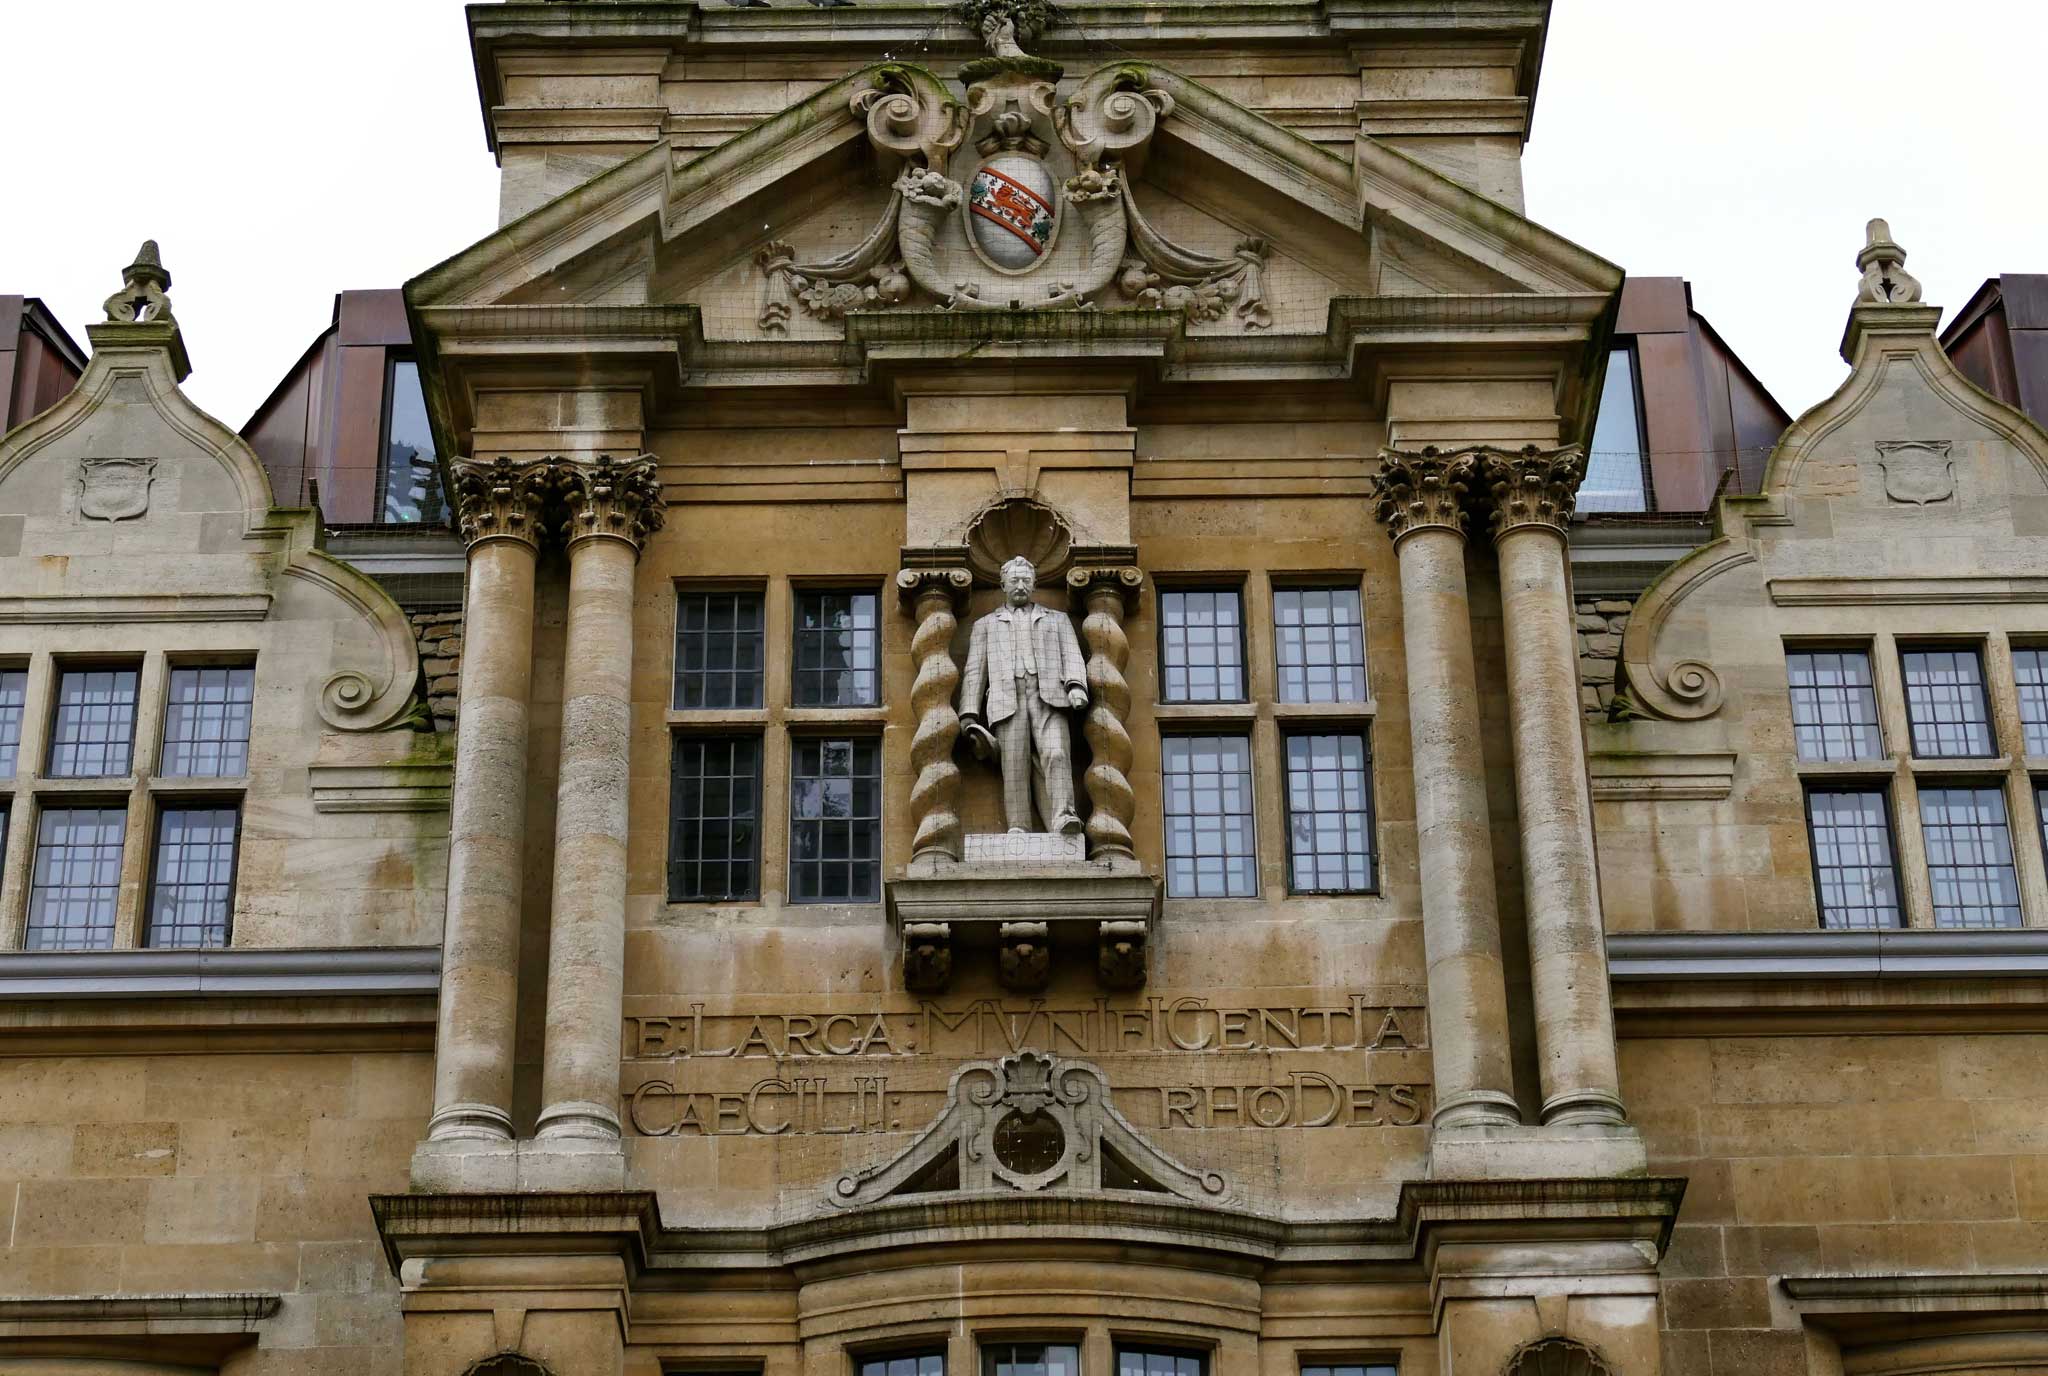 A statue of Cecil Rhodes outside Oriel College, Oxford